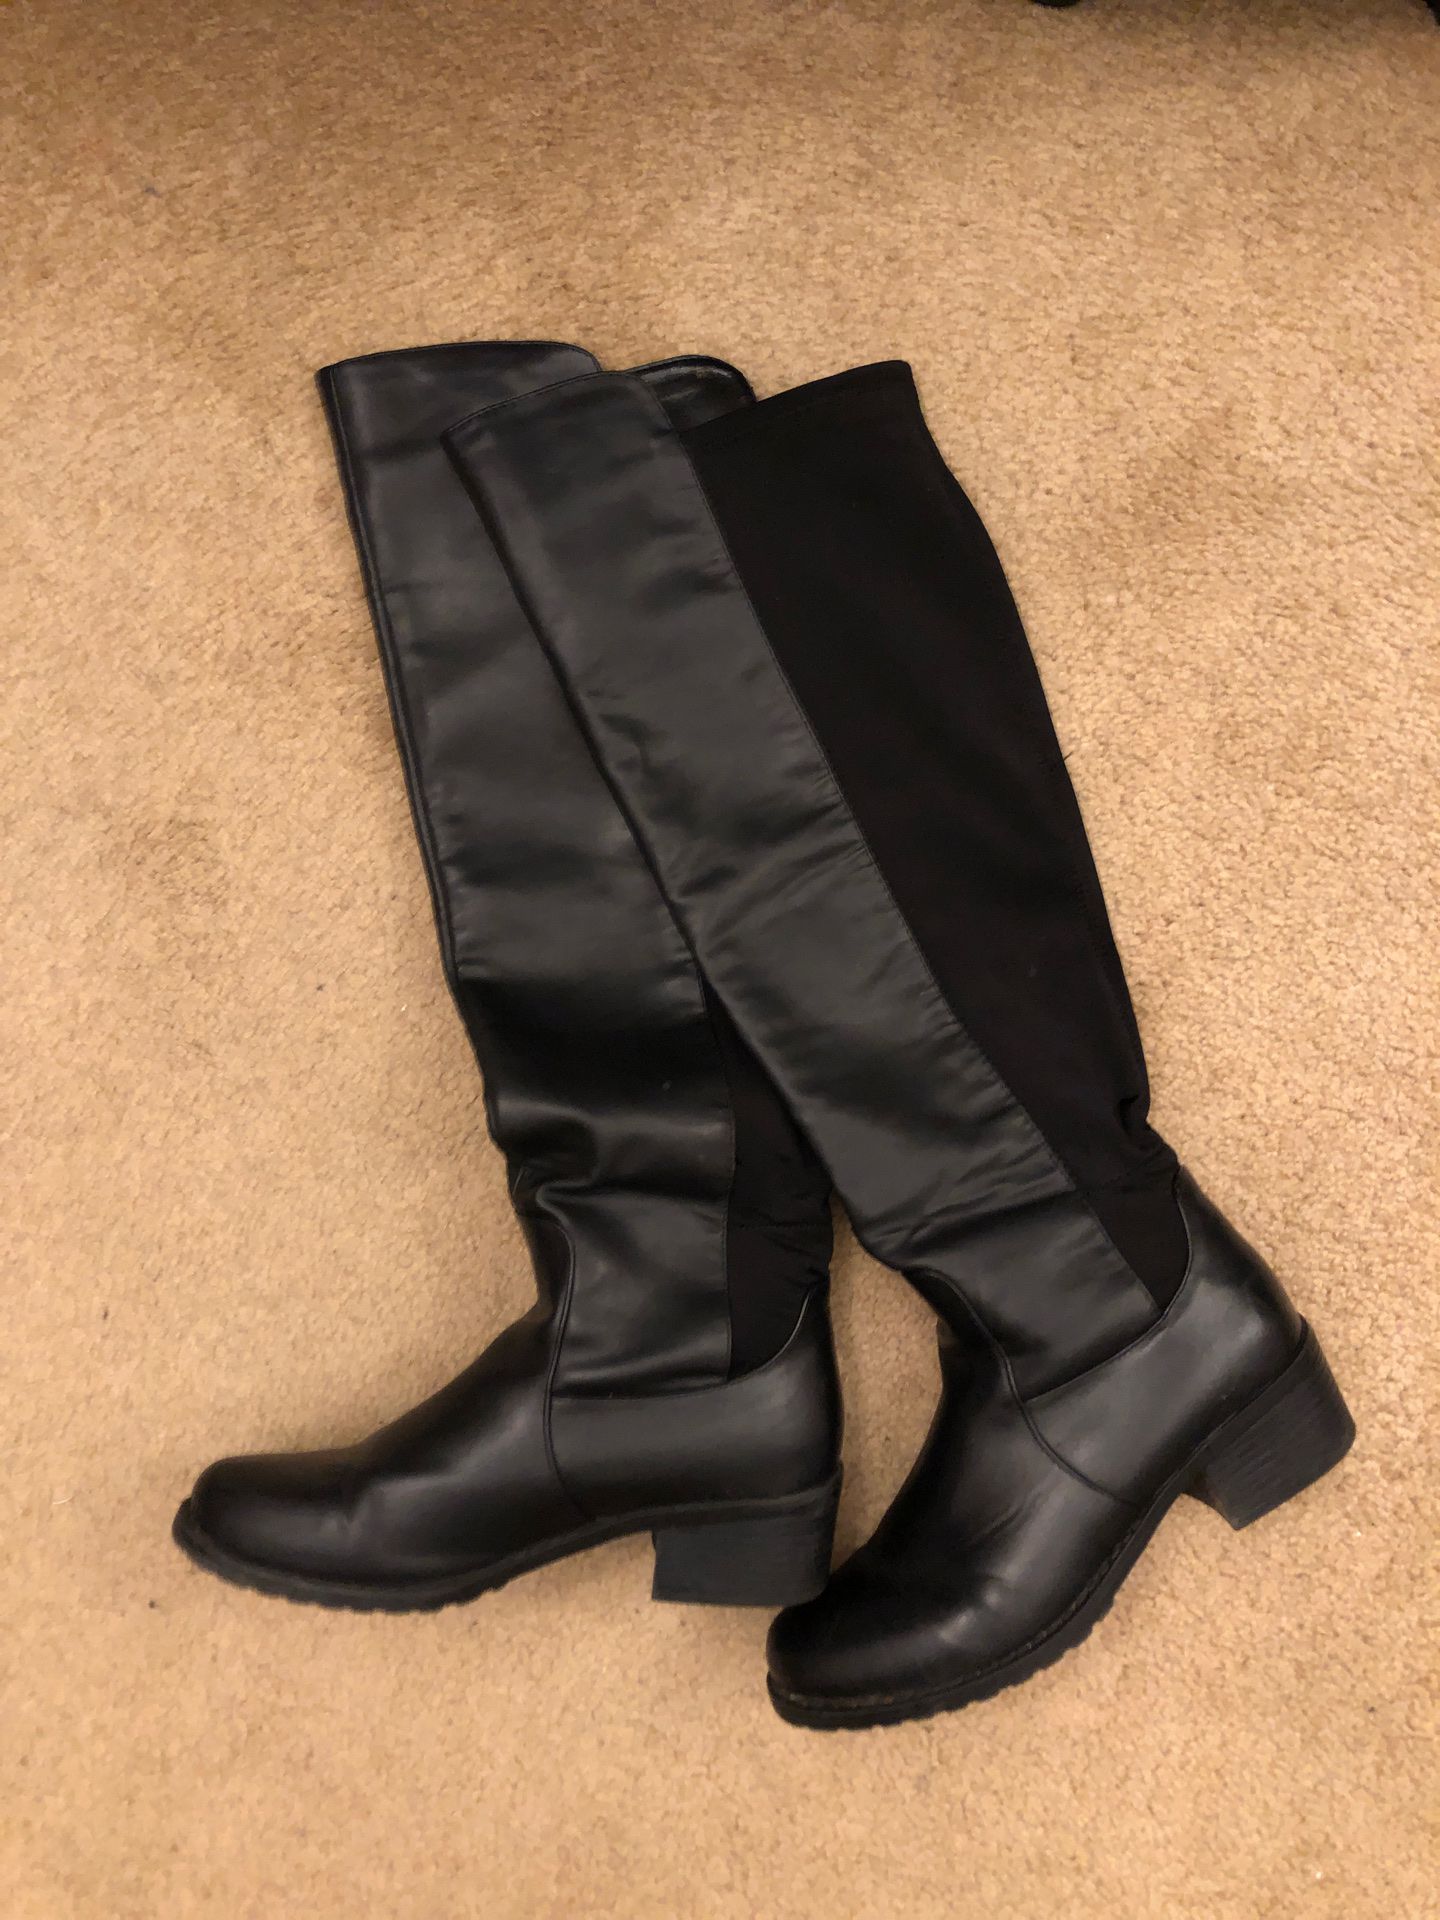 Black Fall/Winter boots